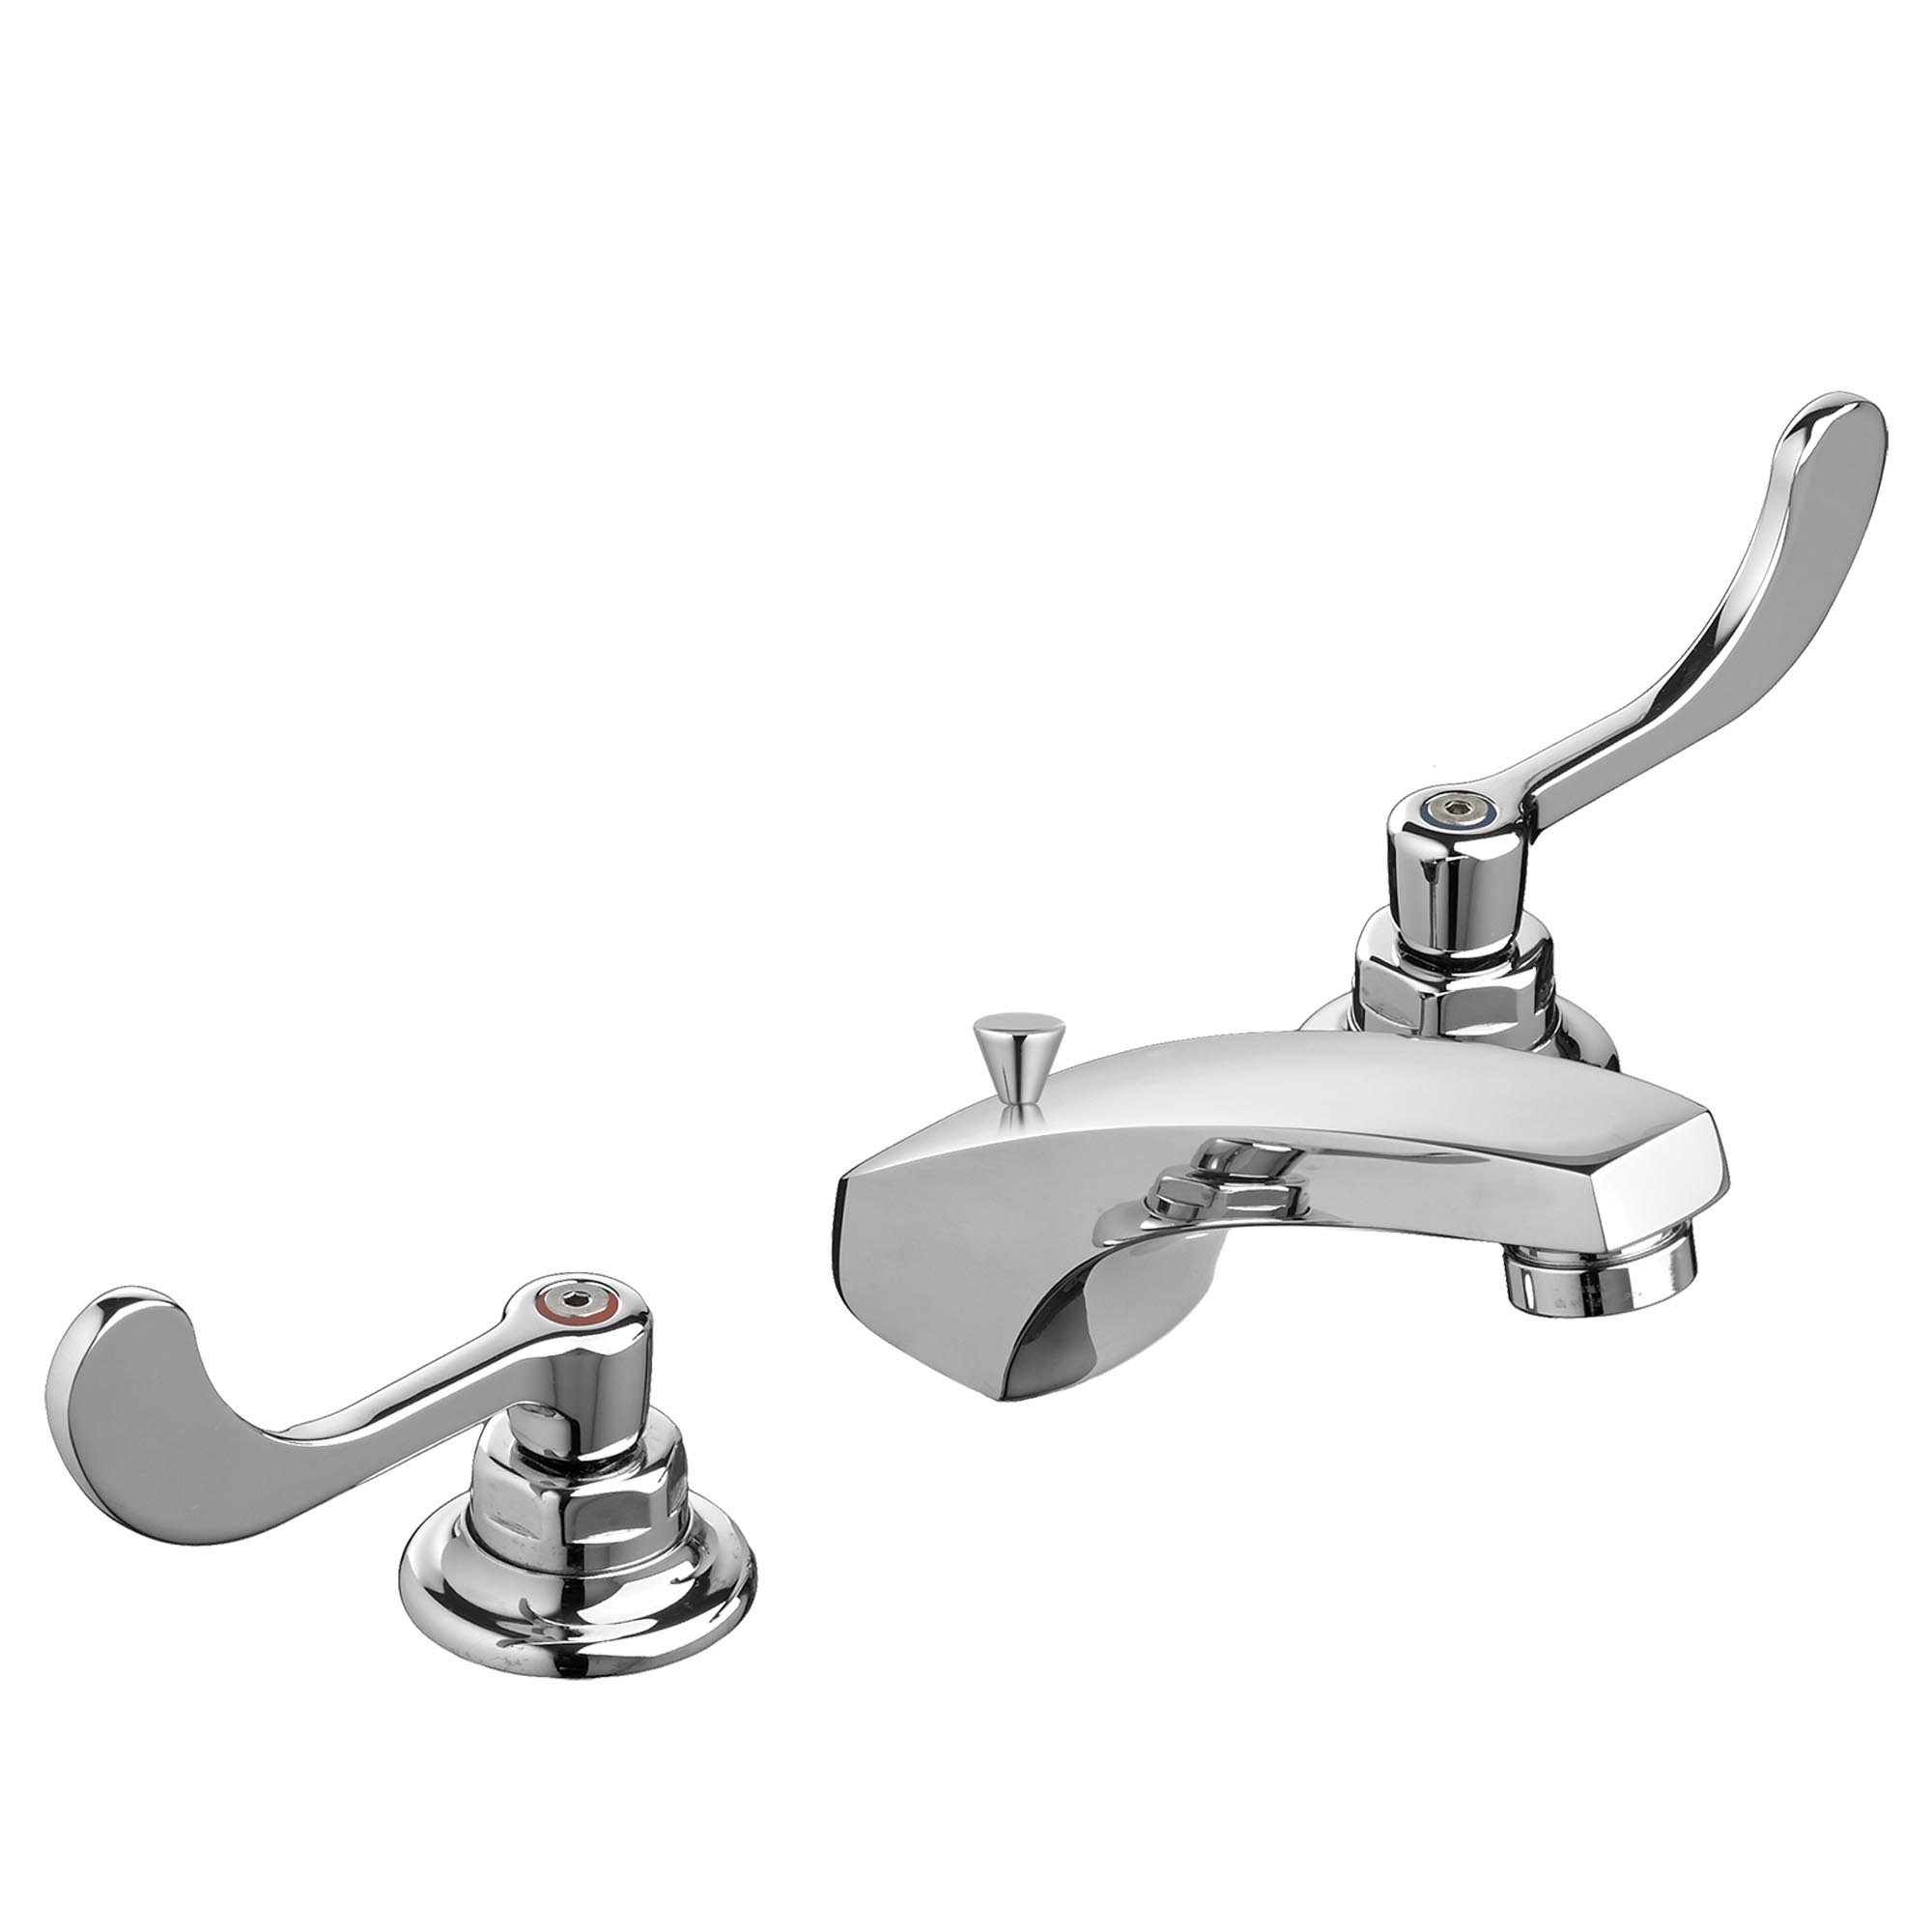 Monterrey® 8-Inch Widespread Cast Faucet With Wrist Blade Handles 0.5 gpm/1.9 Lpm